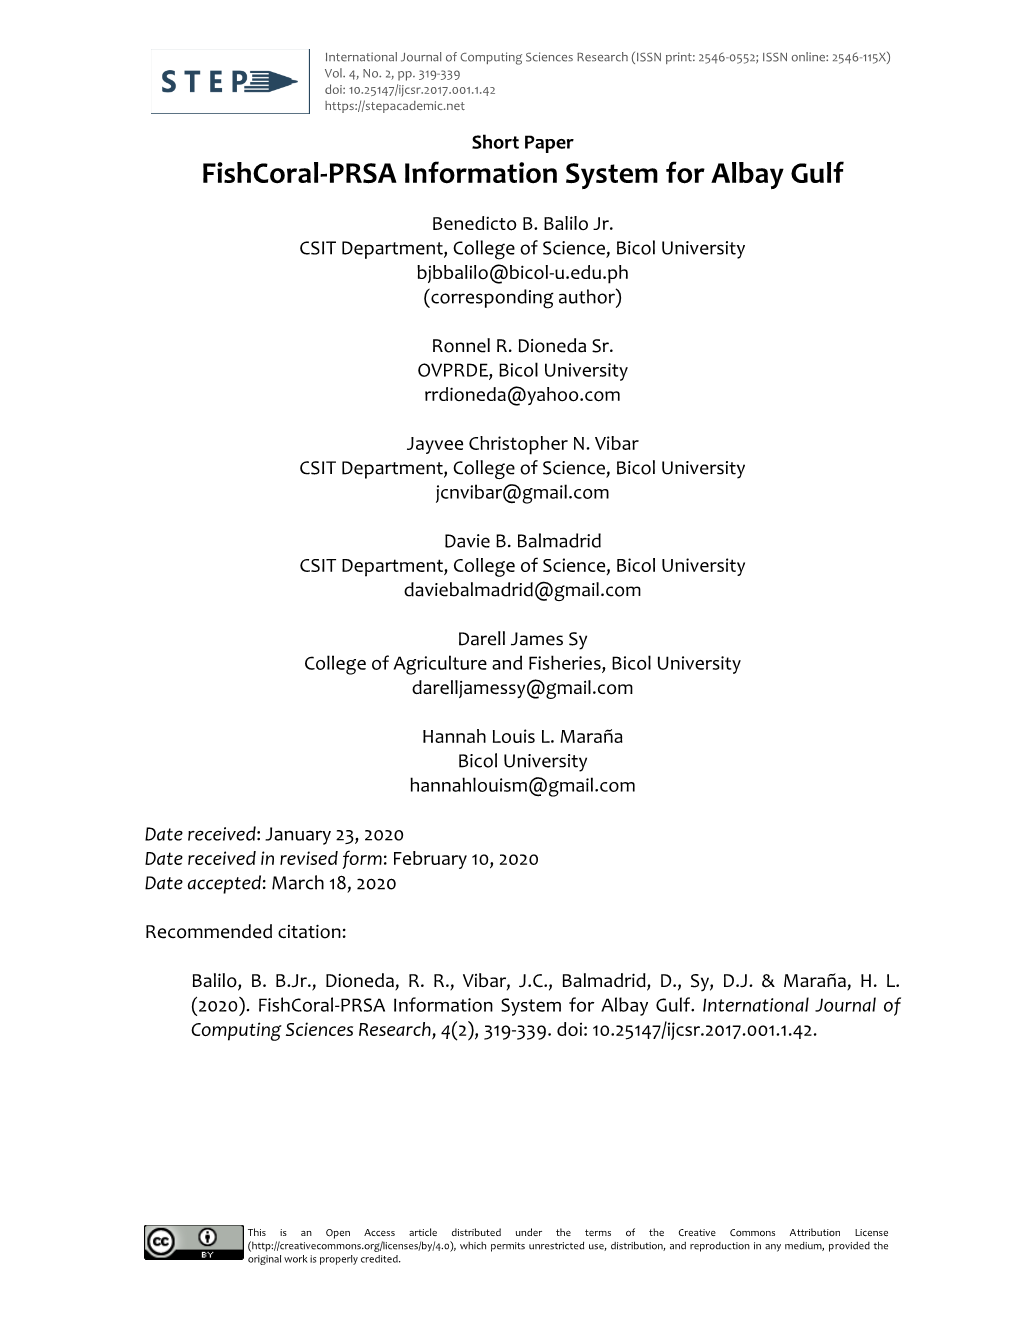 Fishcoral-PRSA Information System for Albay Gulf